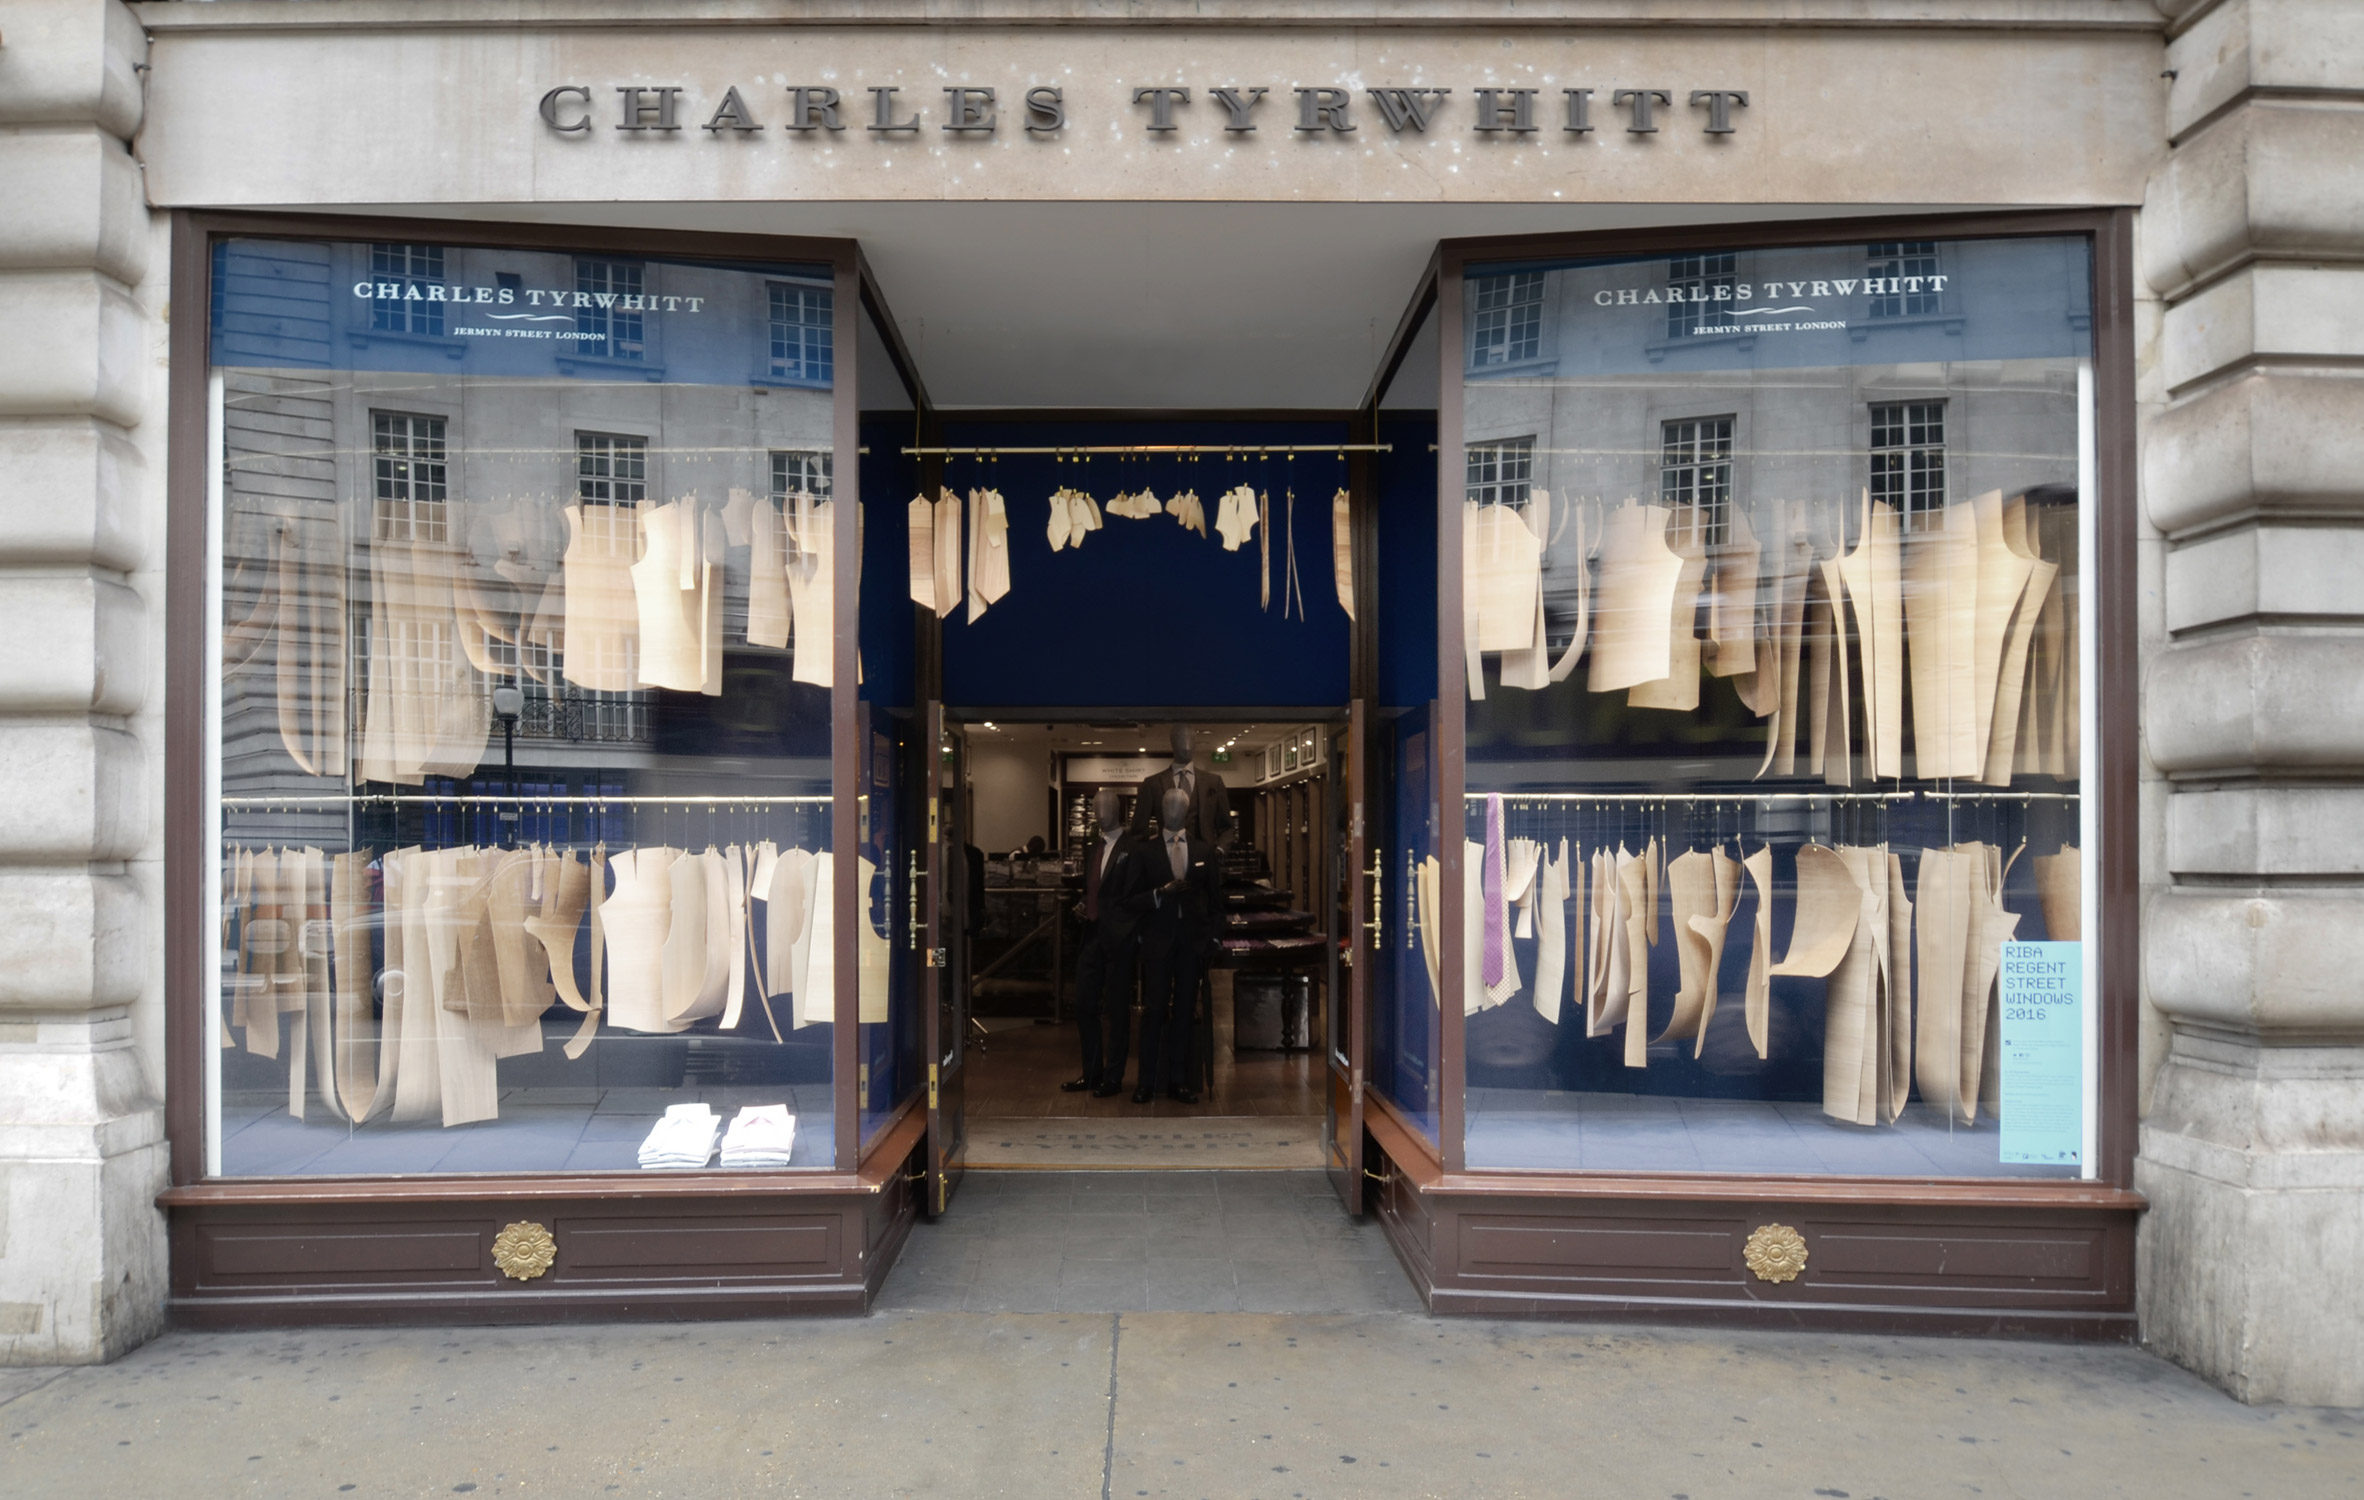 Charles Tyrwhitt RIBA window display 2016 with Bureau de Change